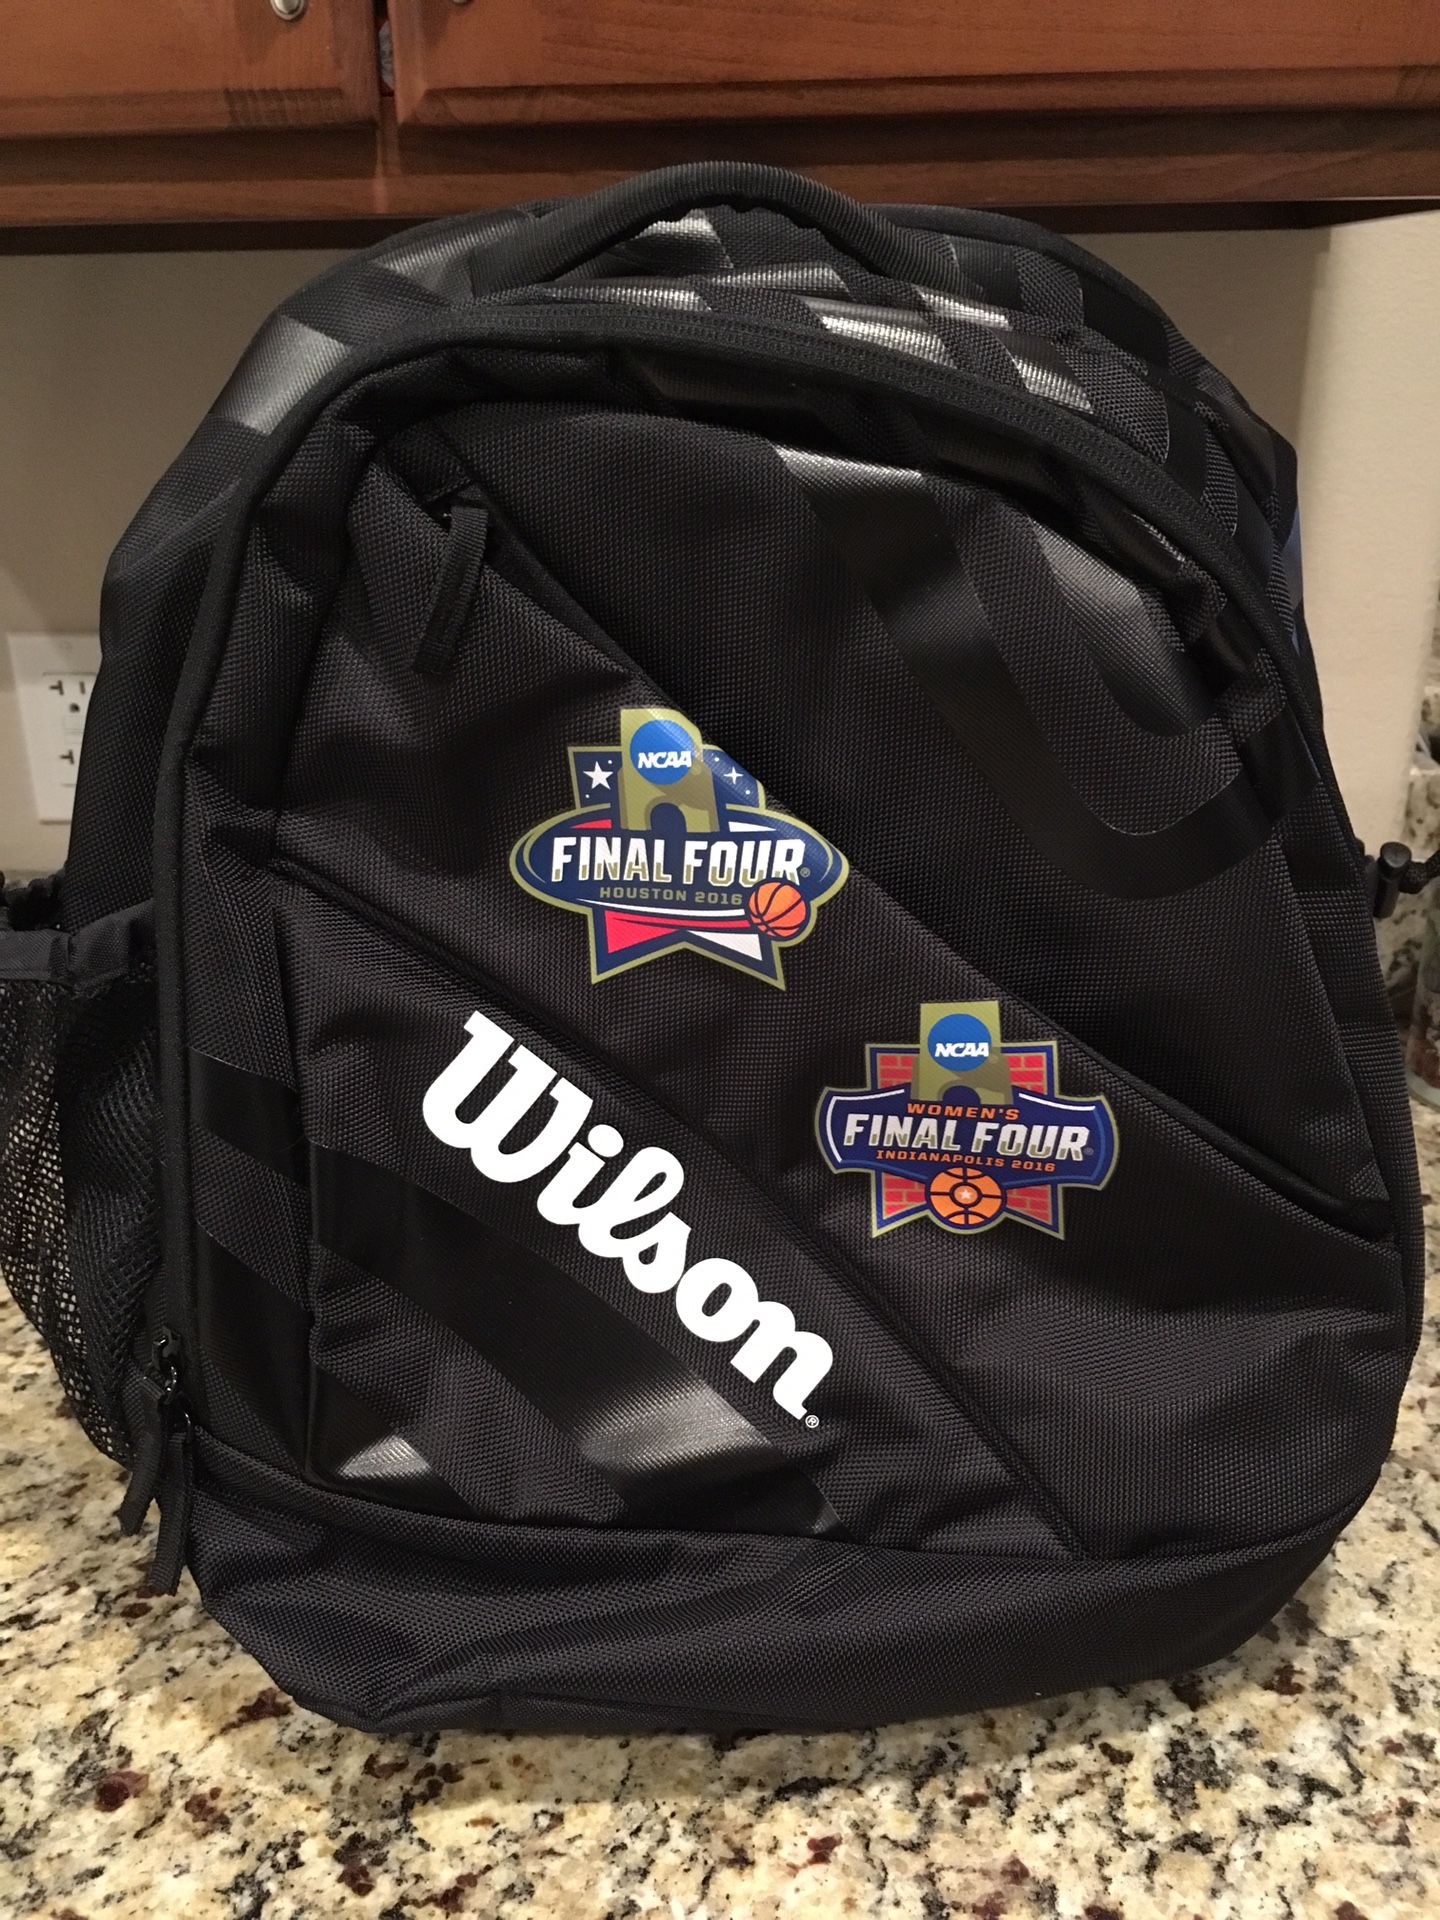 Wilson Backpack new never used $20